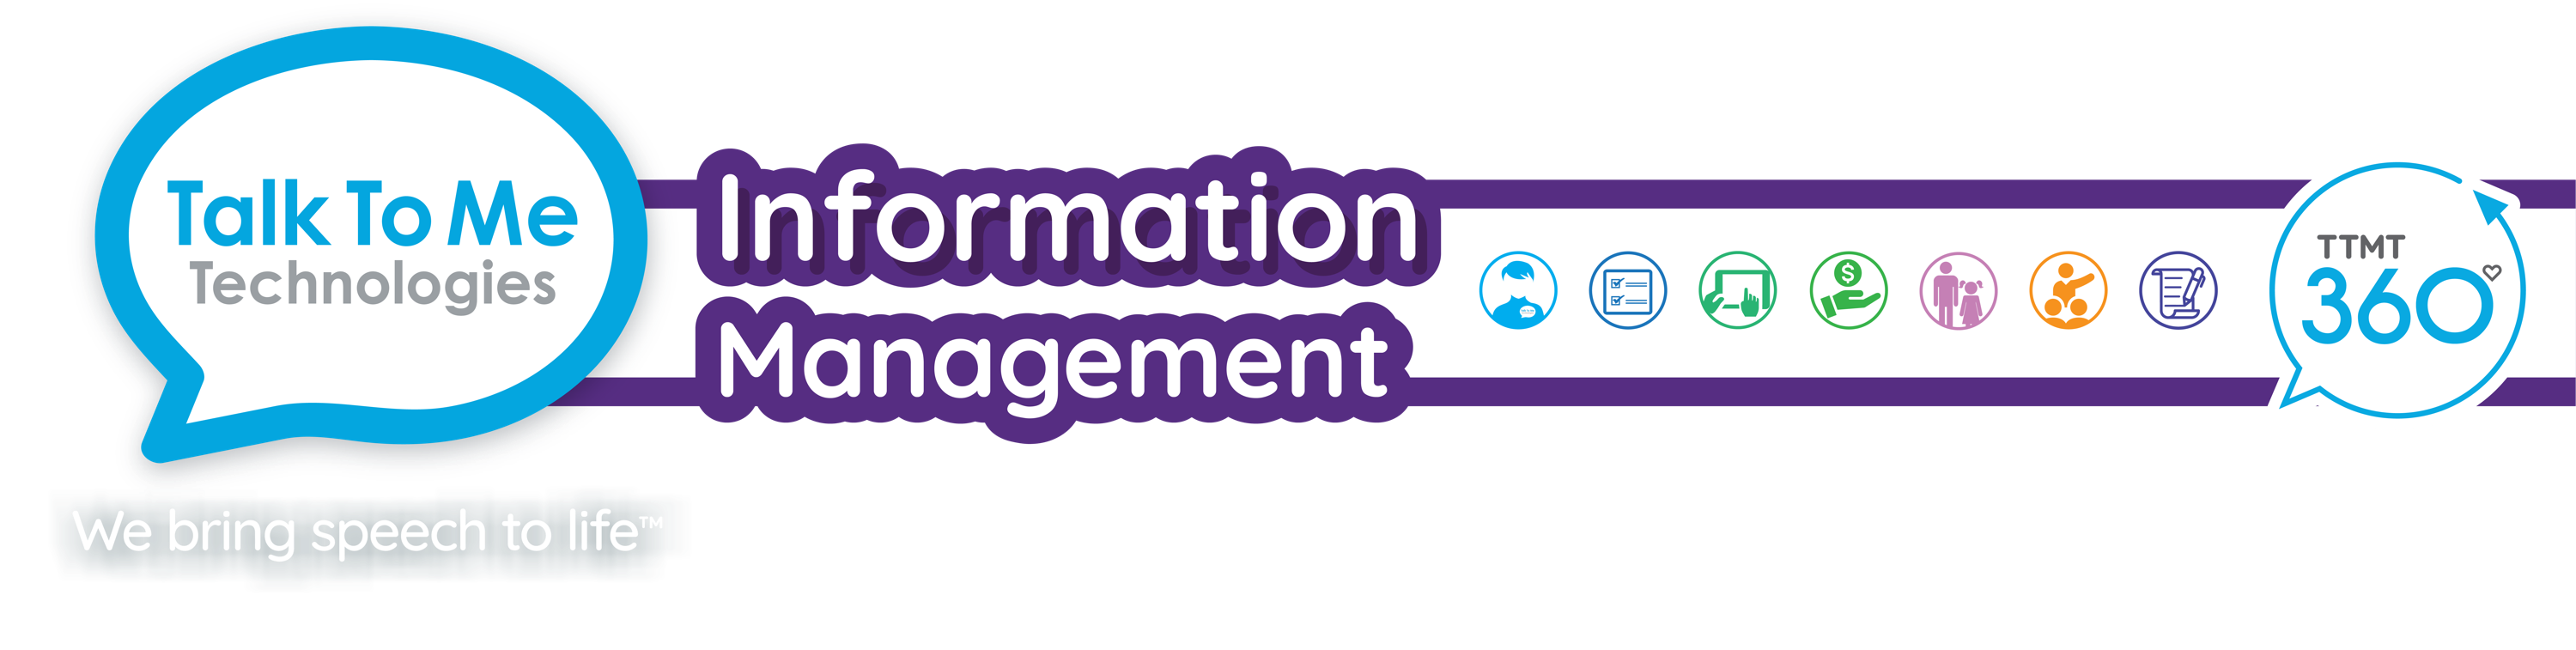 information management header